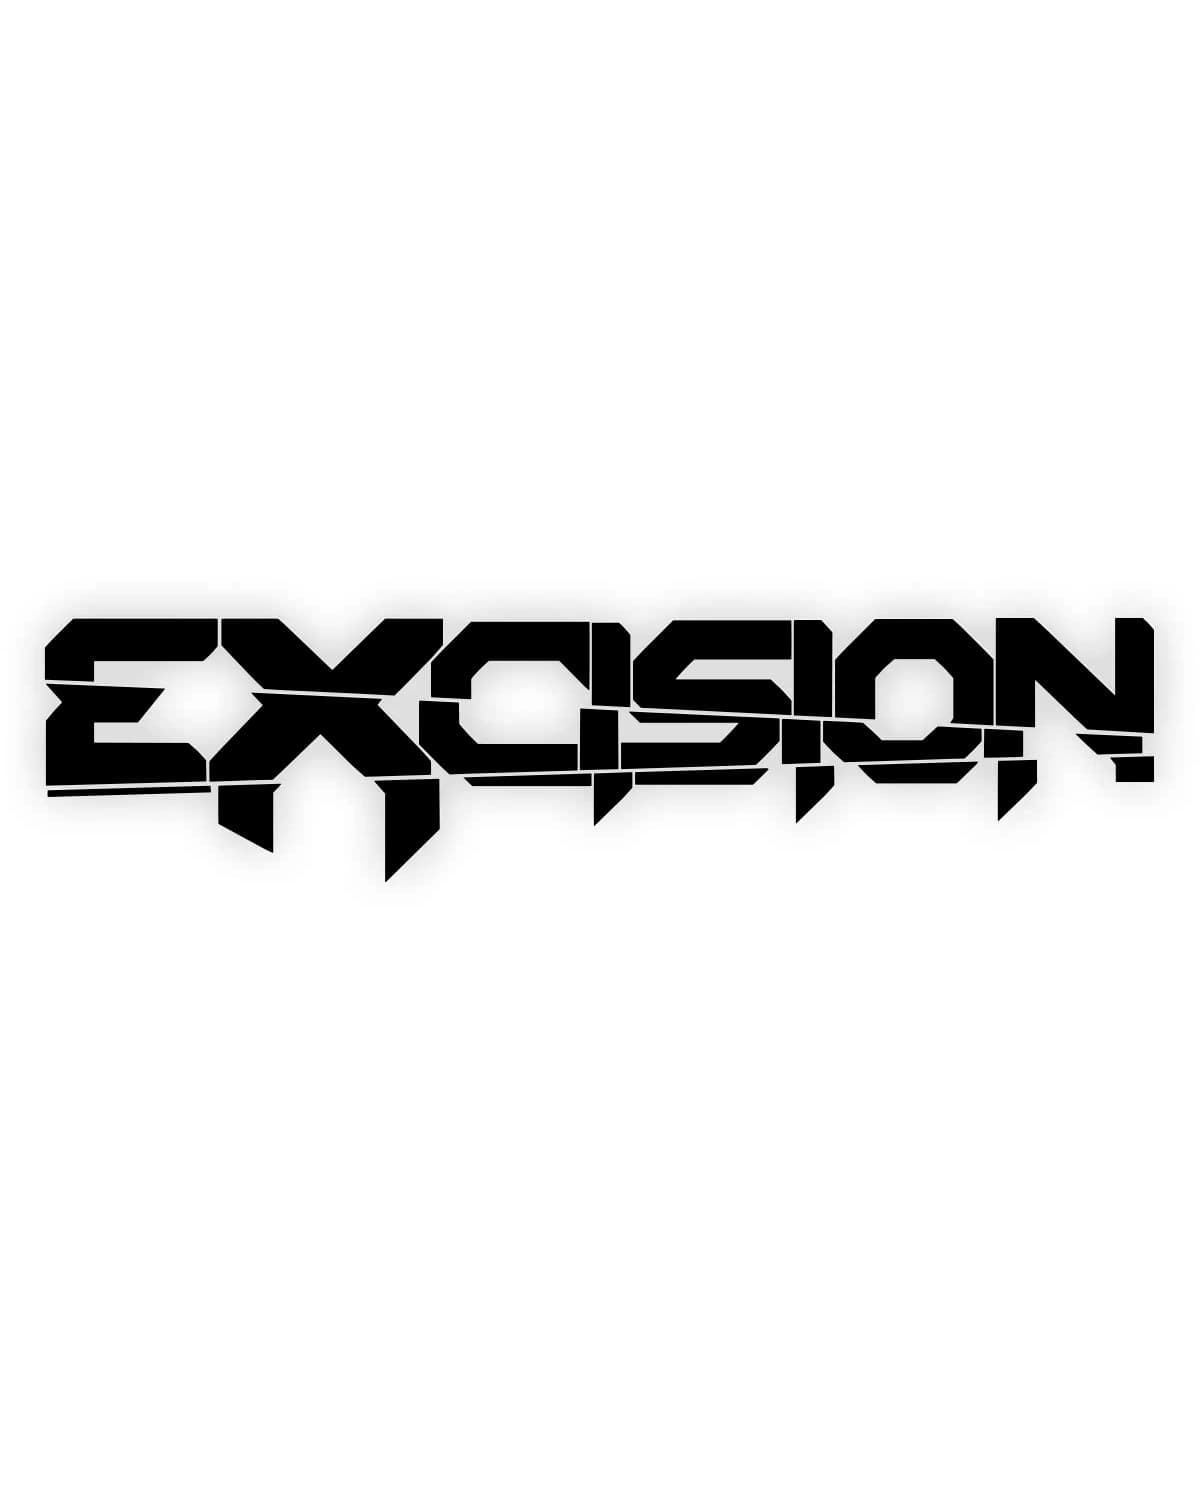 Excision Logo Vinyl Decal (30" x 7")